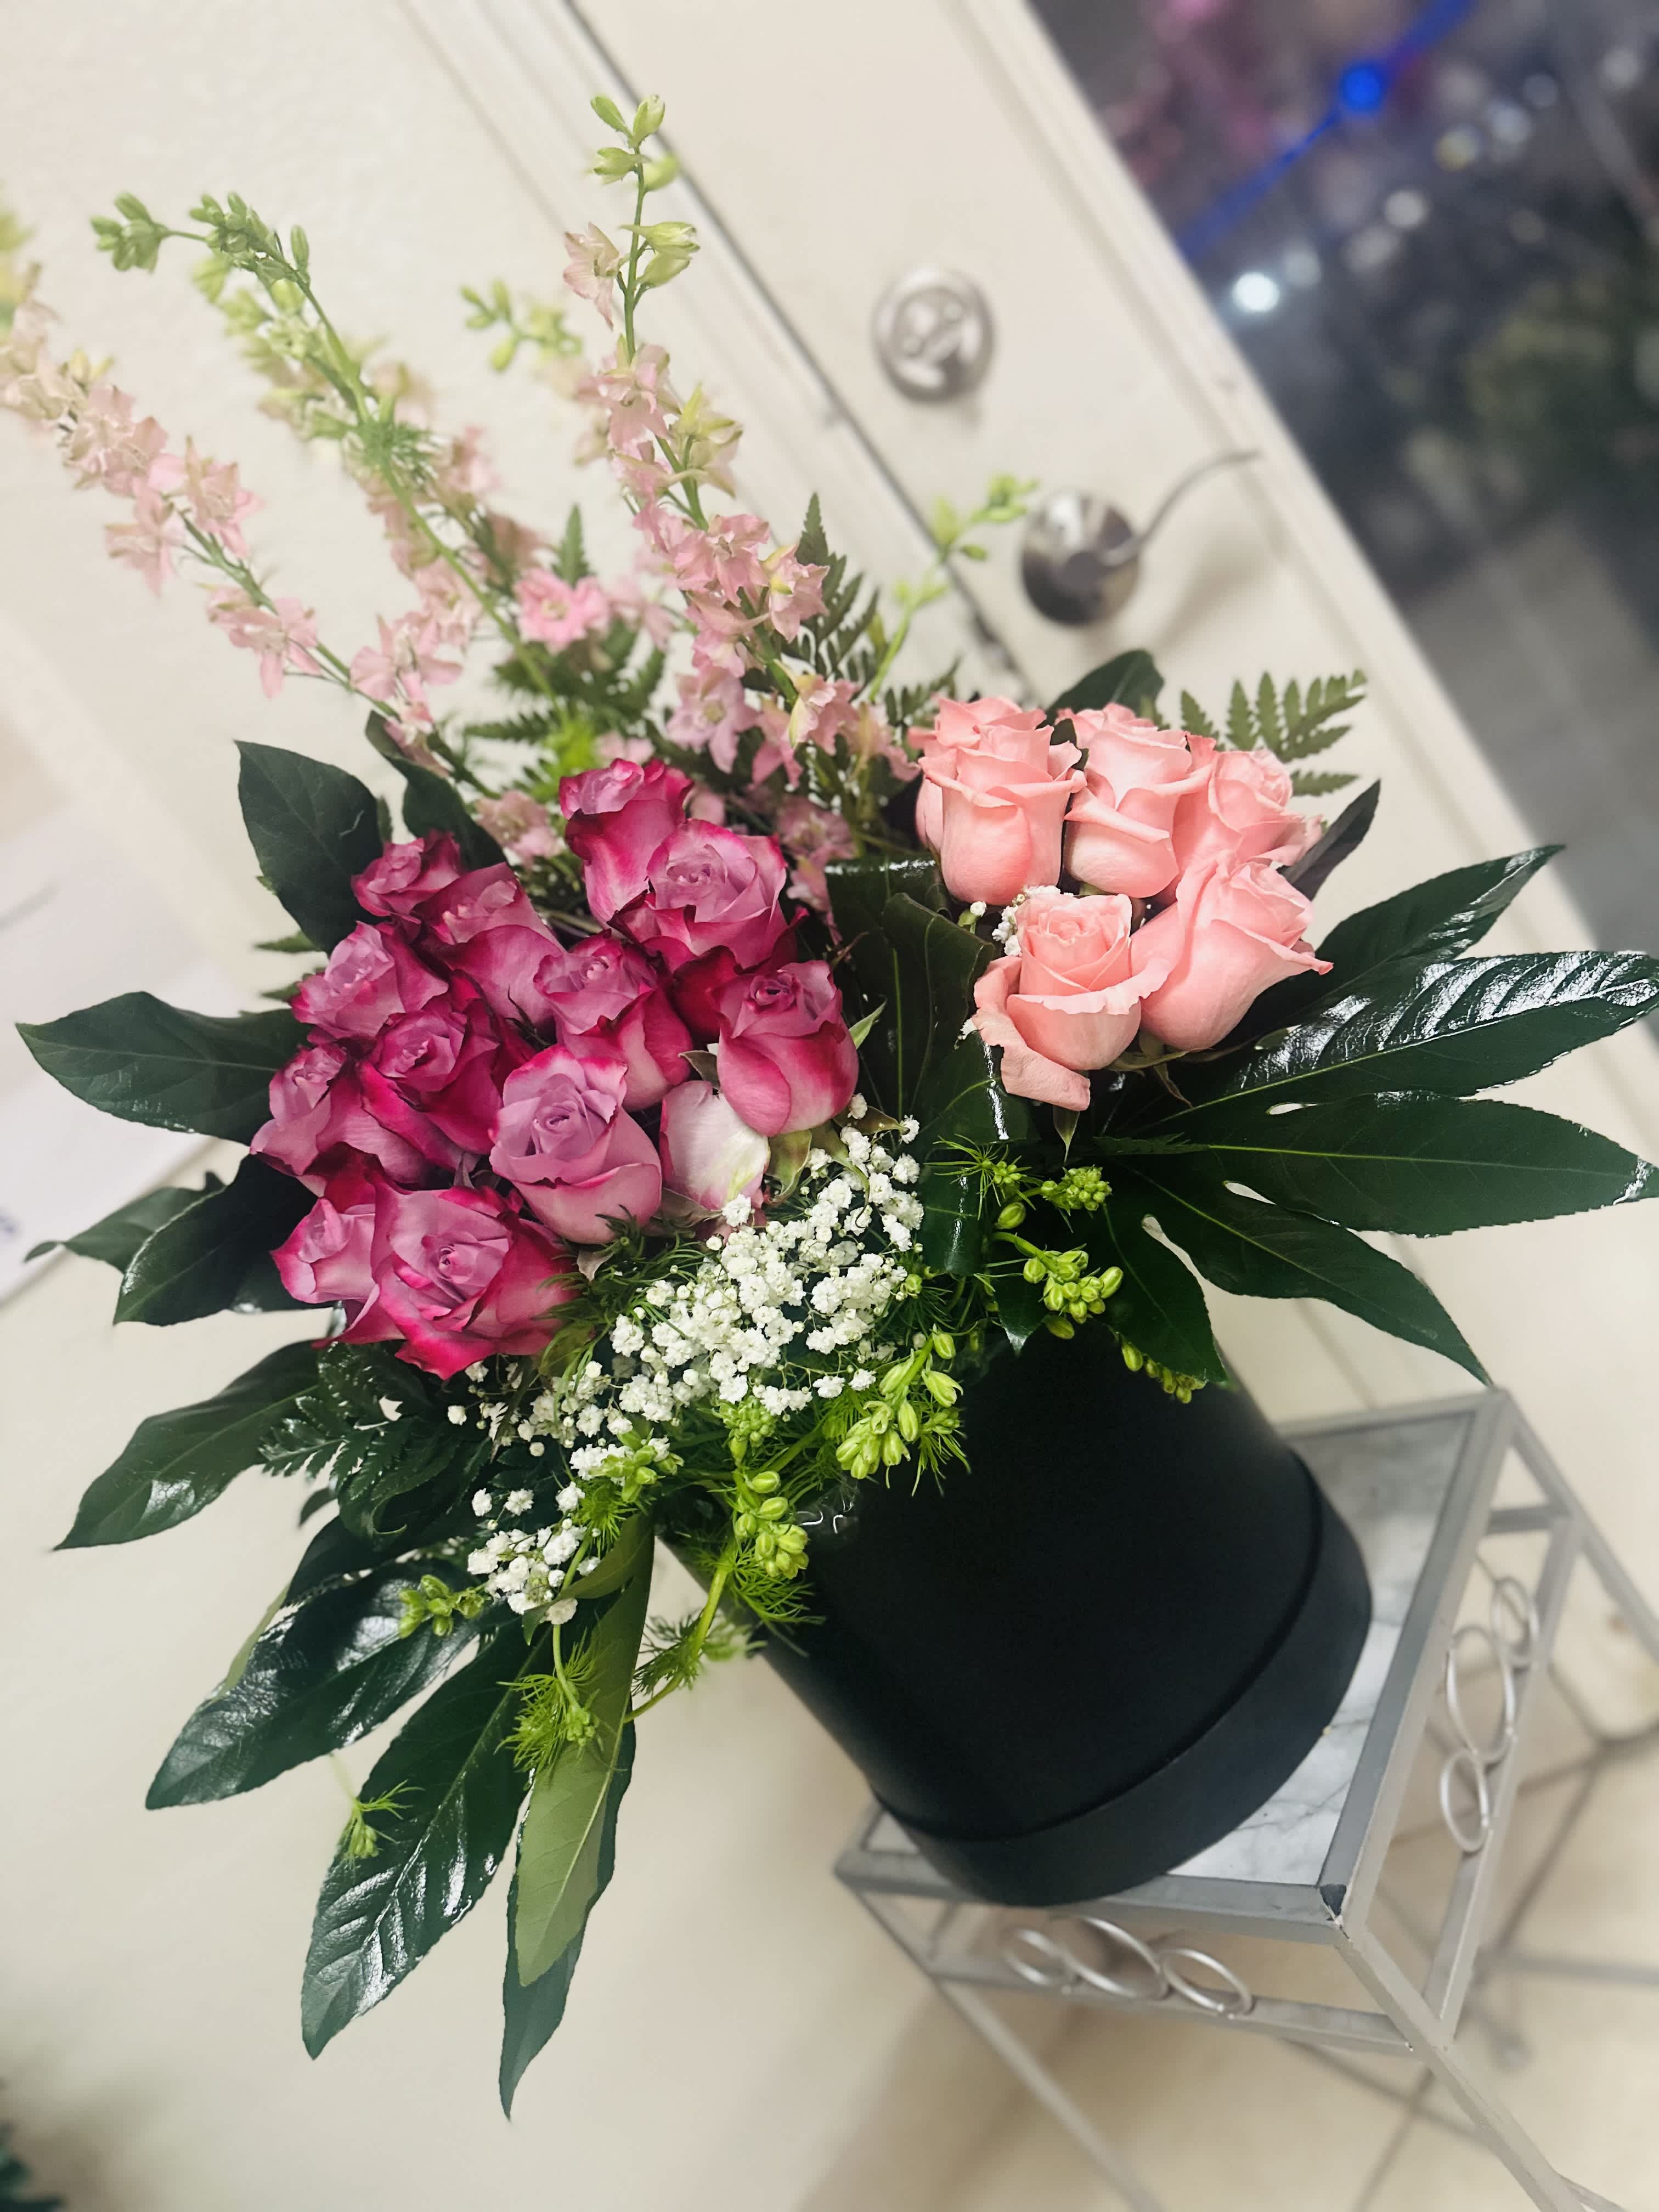 Elegant bouquet  - A unique arrange of different light colors in a cylinder box that brings out the elegance of a unique arrangement. 